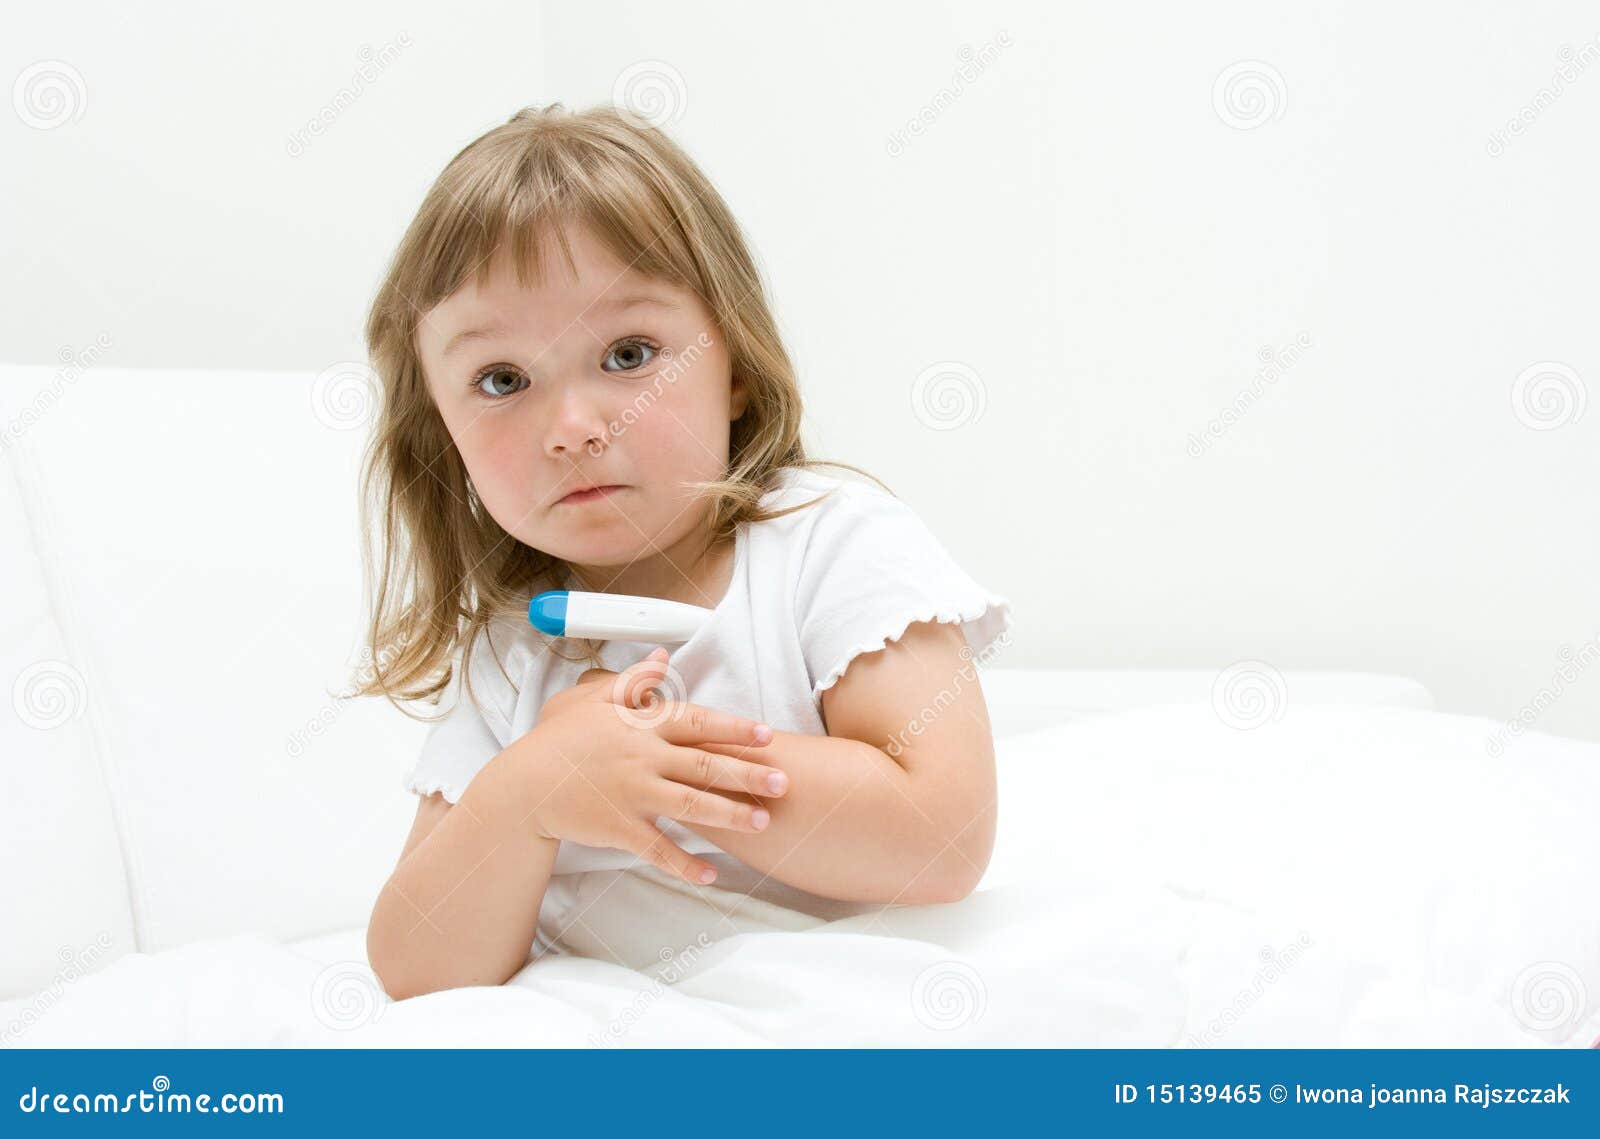 clipart sick little girl - photo #43